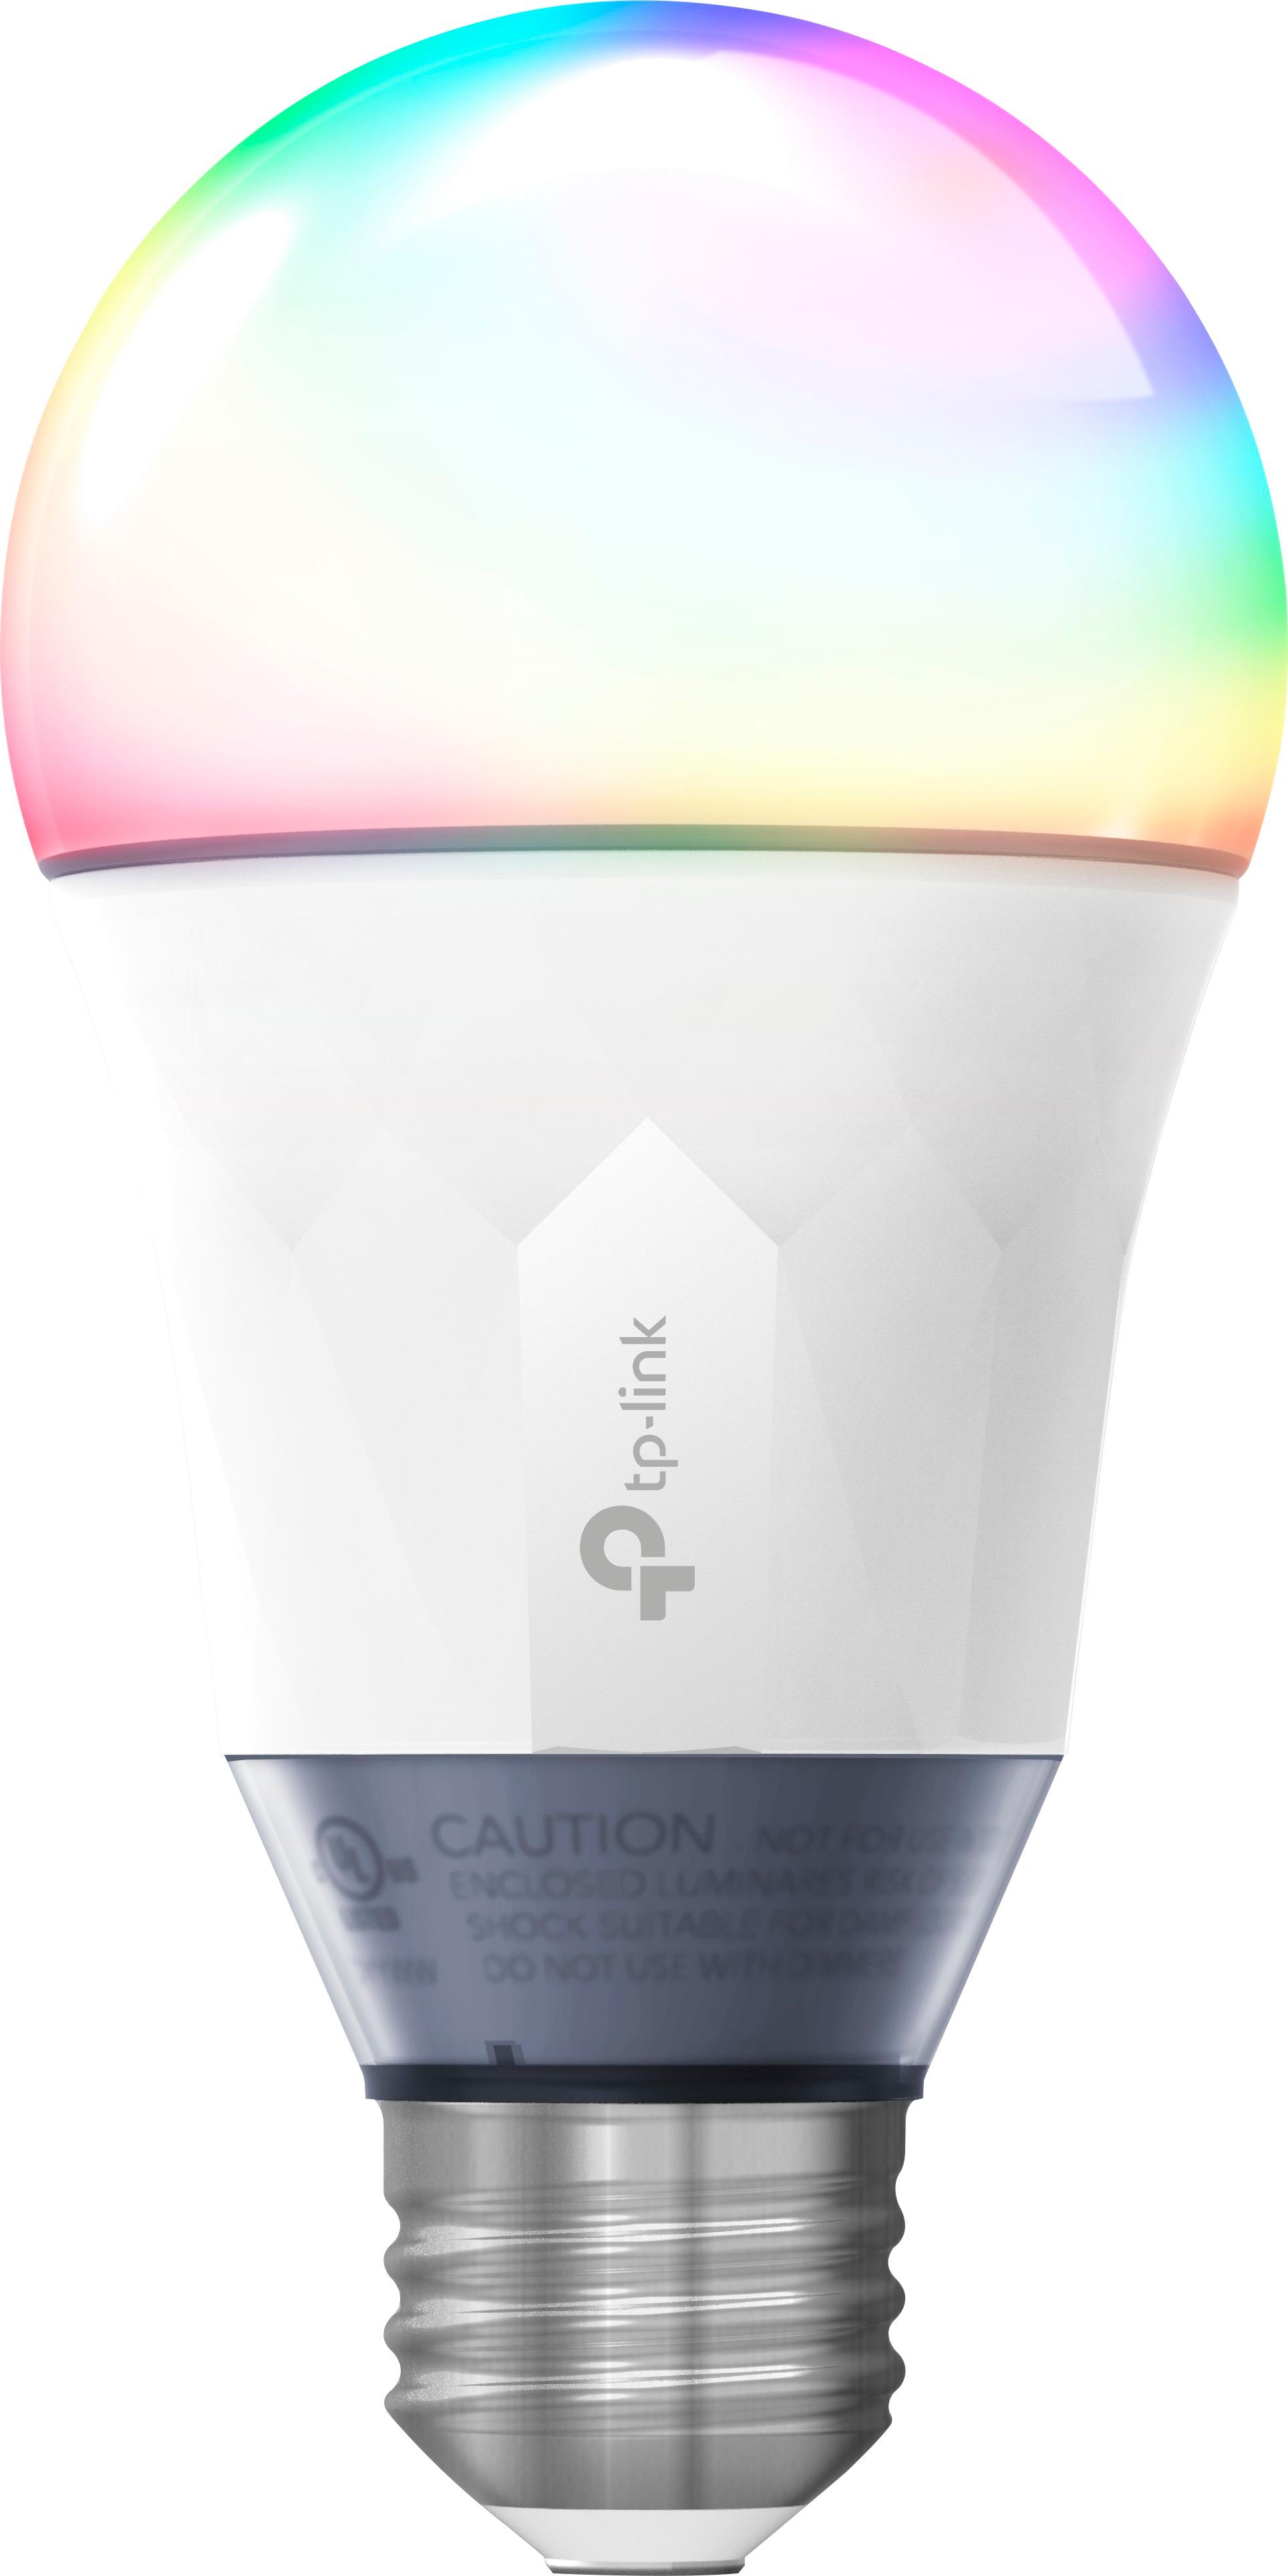 TP-LINK LB130 A19 Smart LED Light Bulb, 60W Equivalent White LB130 ...